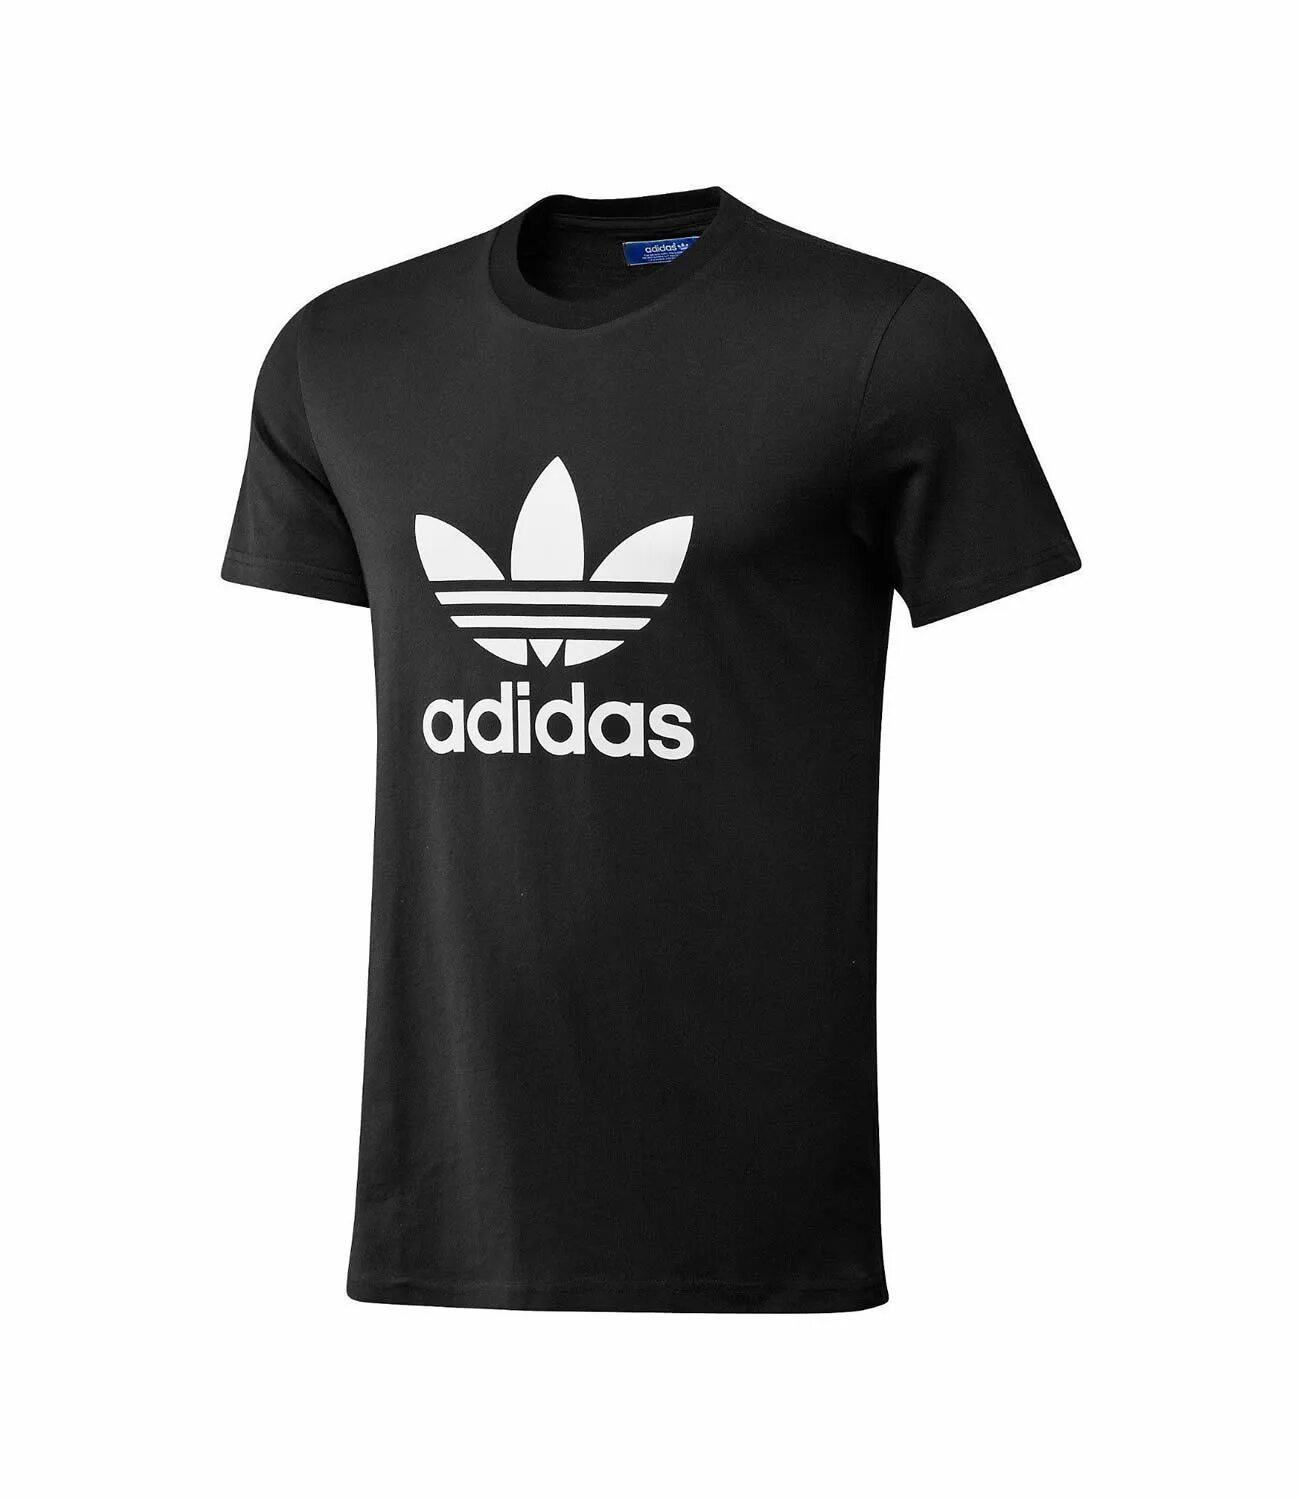 Adidas Printshop. T-Shirt adidas Black. Адидас т ширт. Adidas t Shirt New collection. Адидас сайт купить